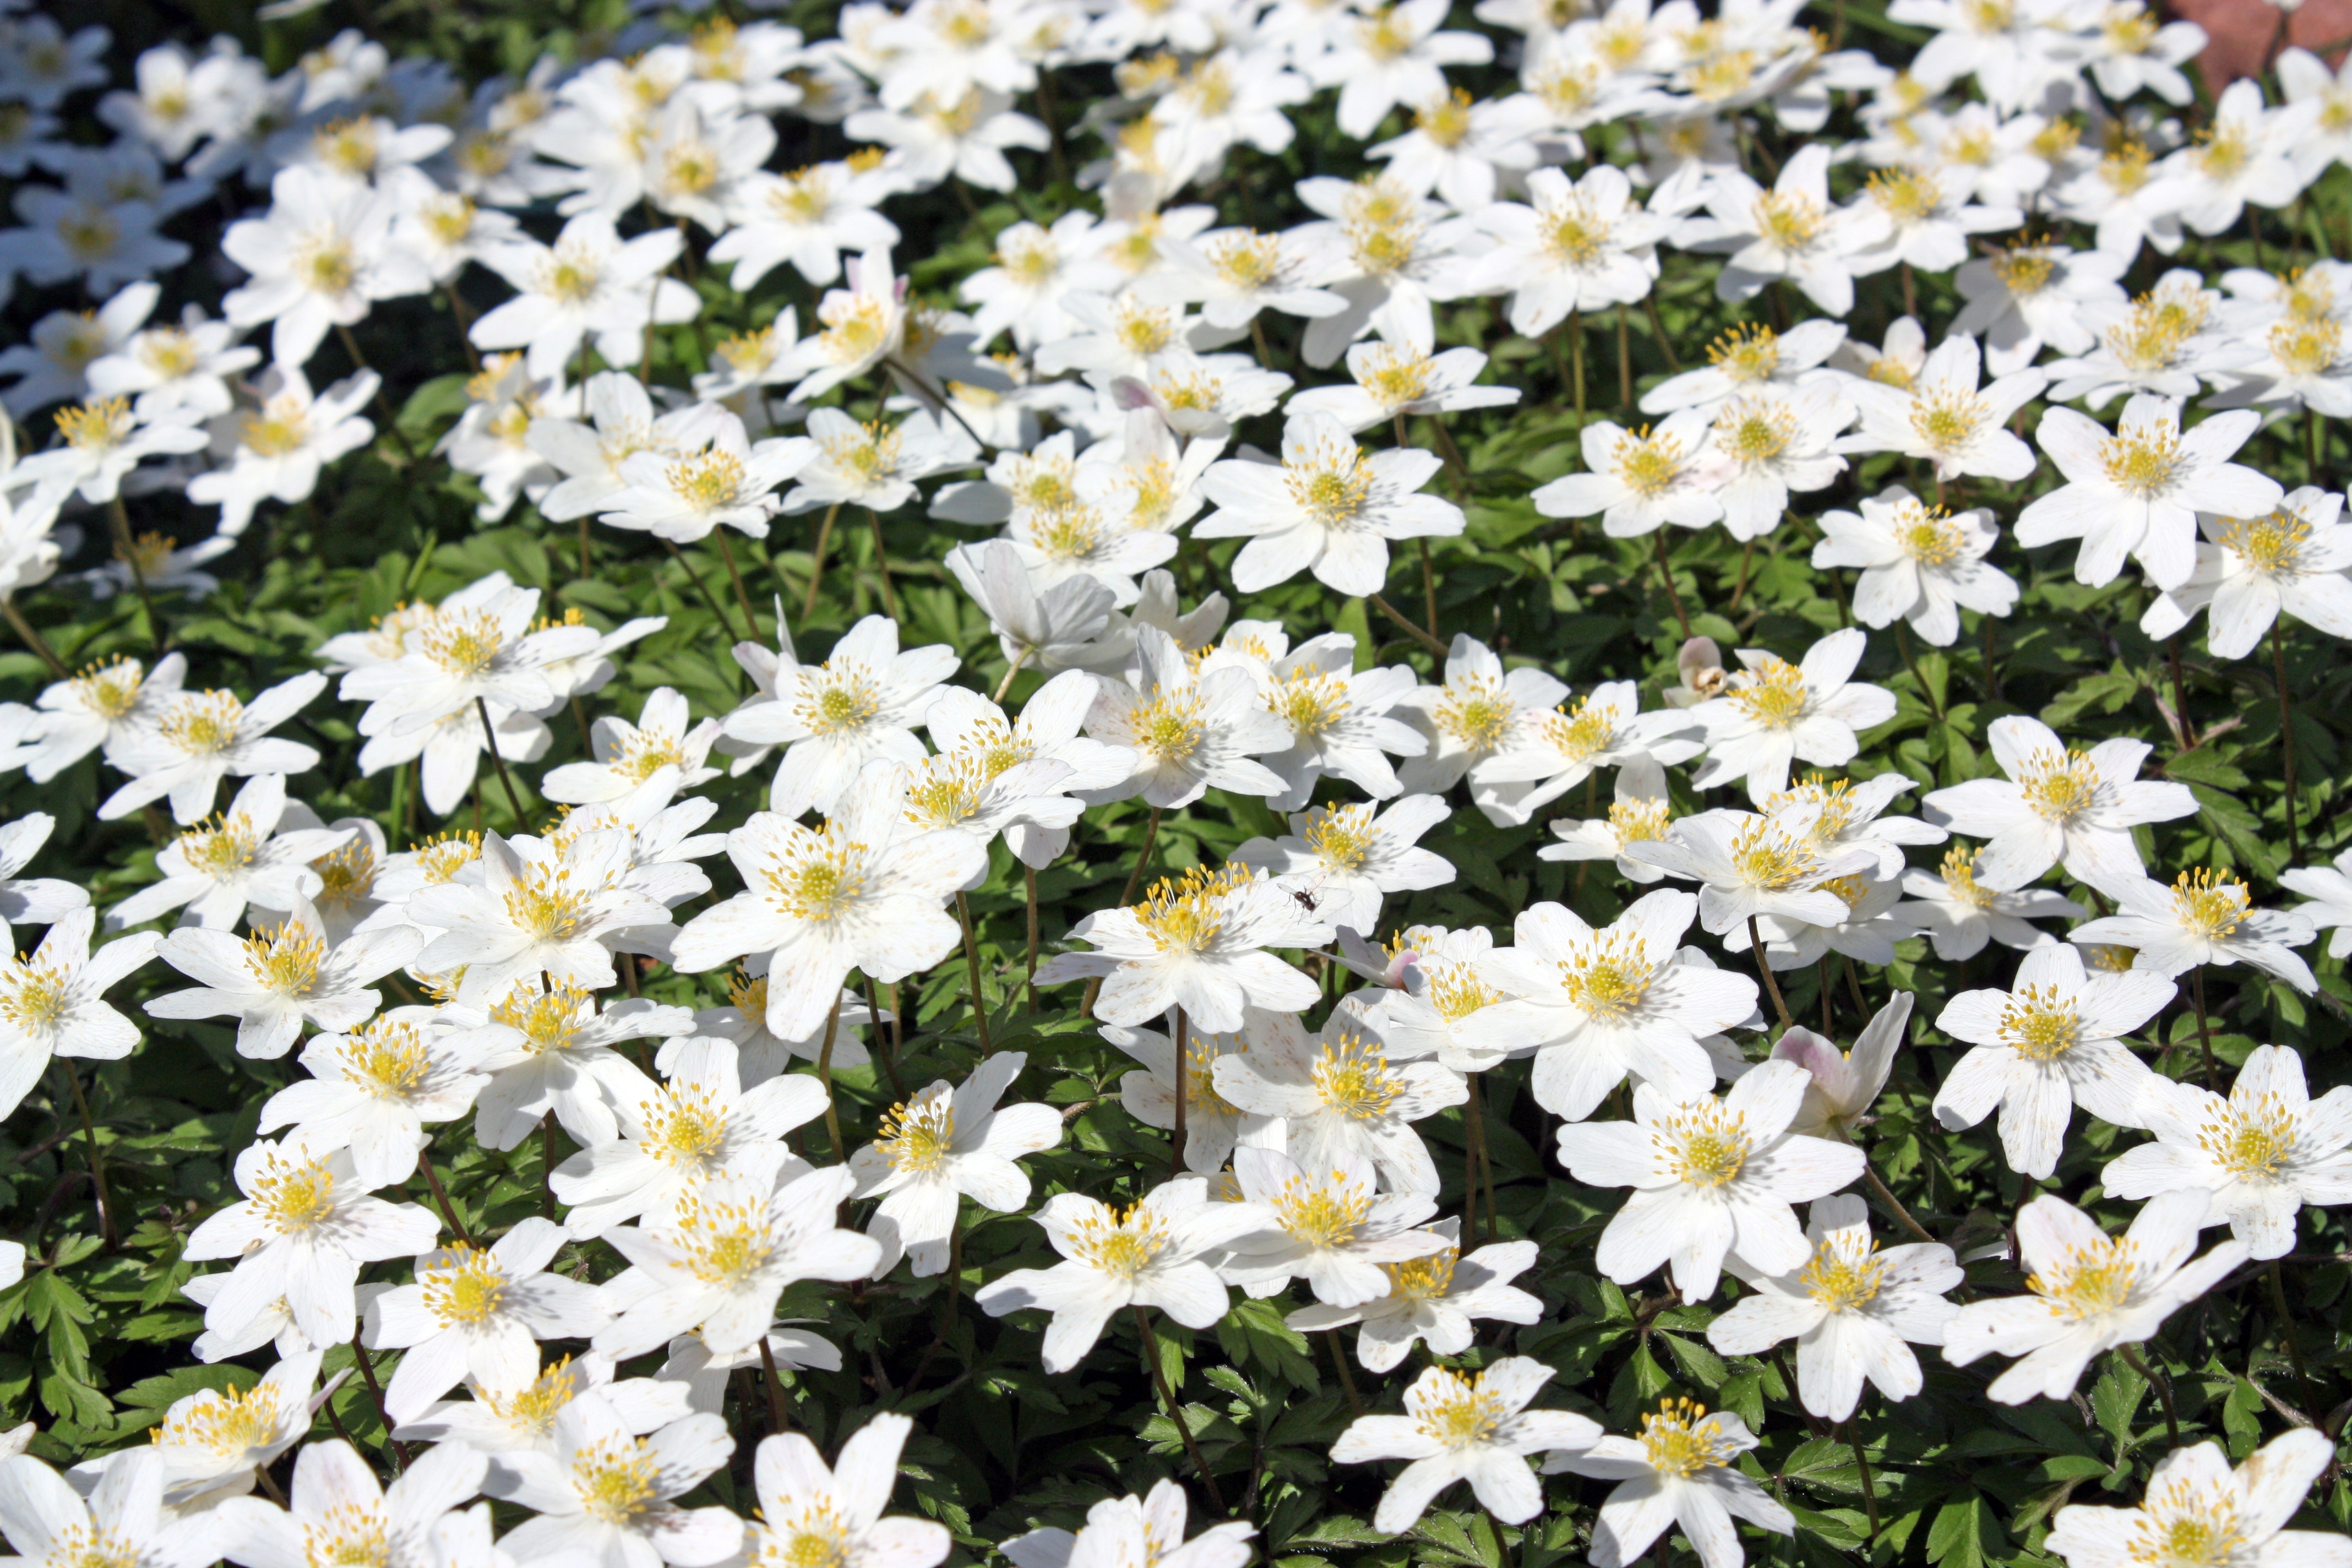 garden of white petaled flowers with yellow stigma